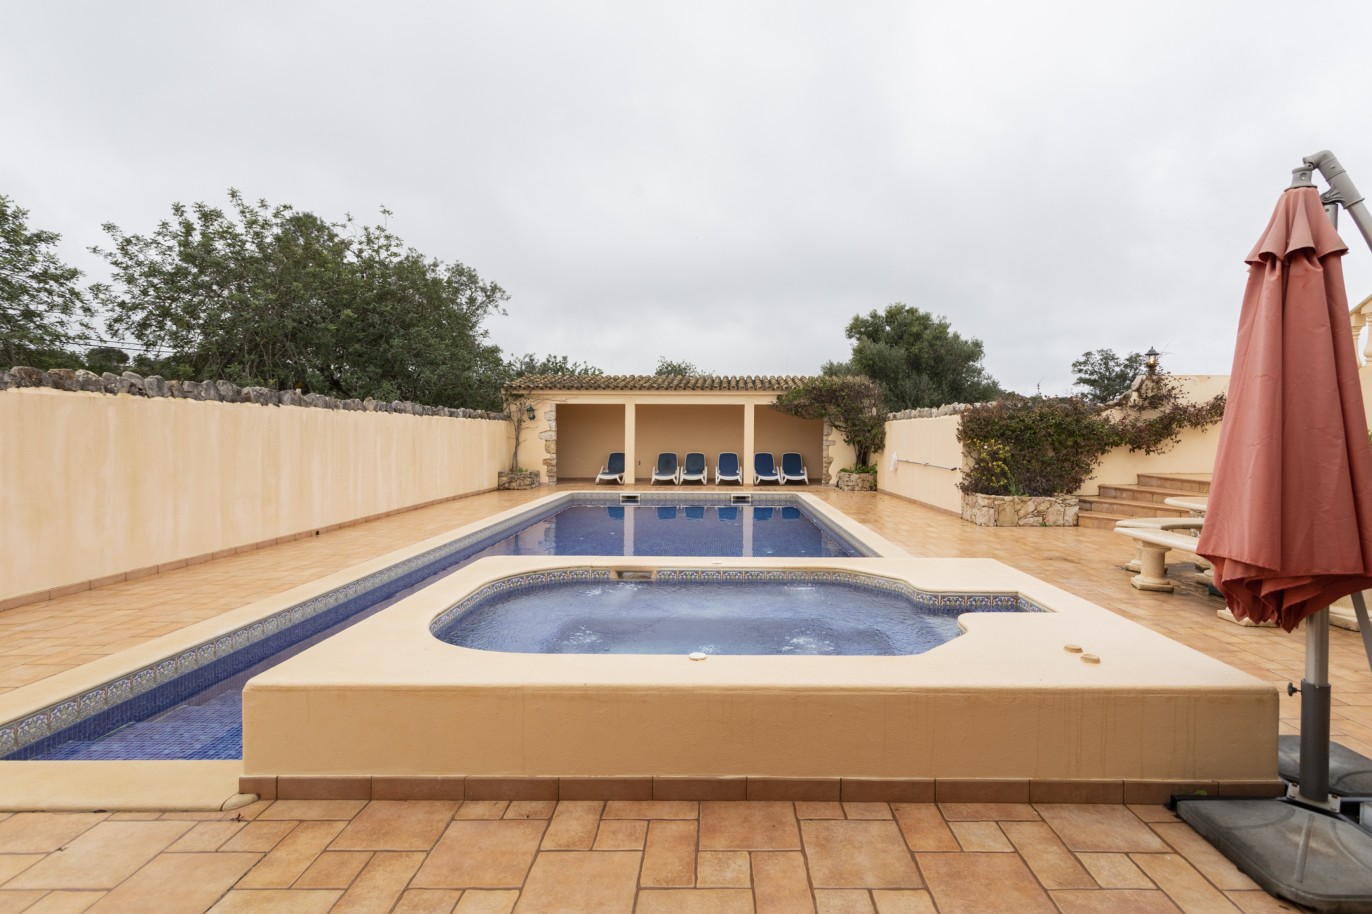 4 Bedroom Villa with swimming pool for sale in Loulé, Algarve_214797